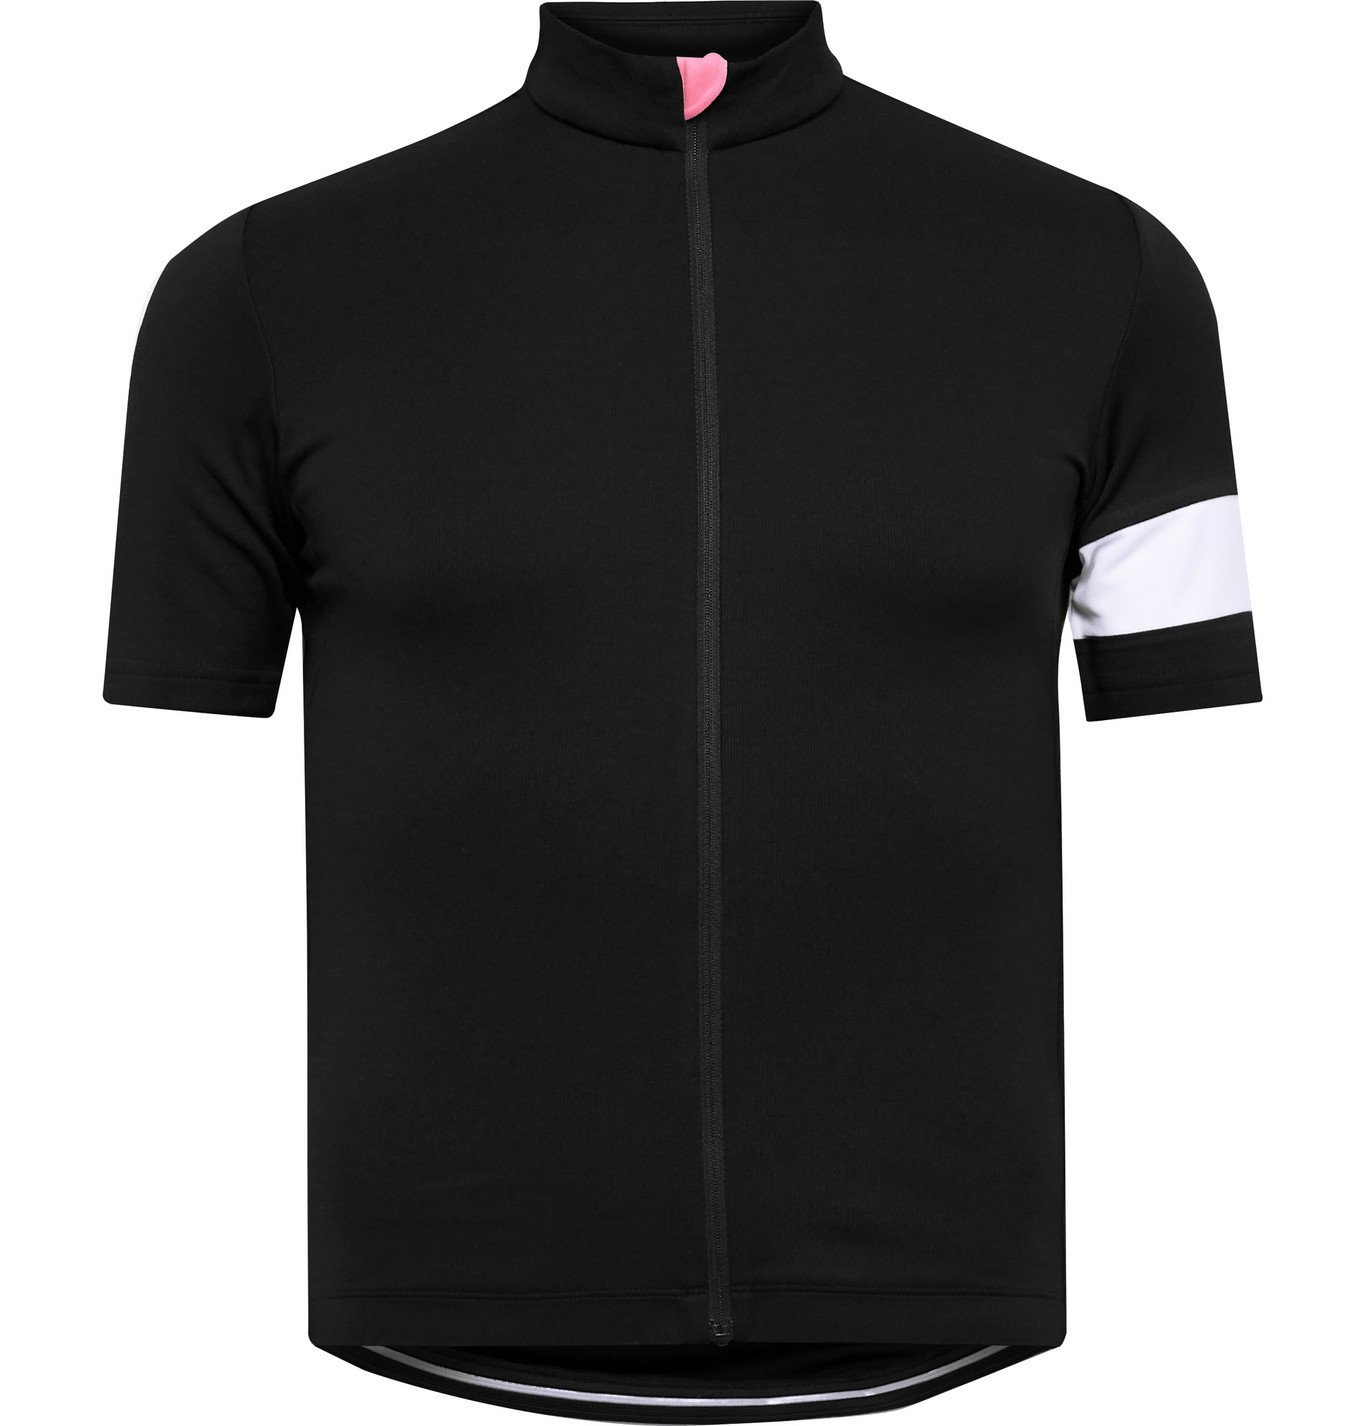 Rapha - Classic Cycling Jersey - Black Rapha